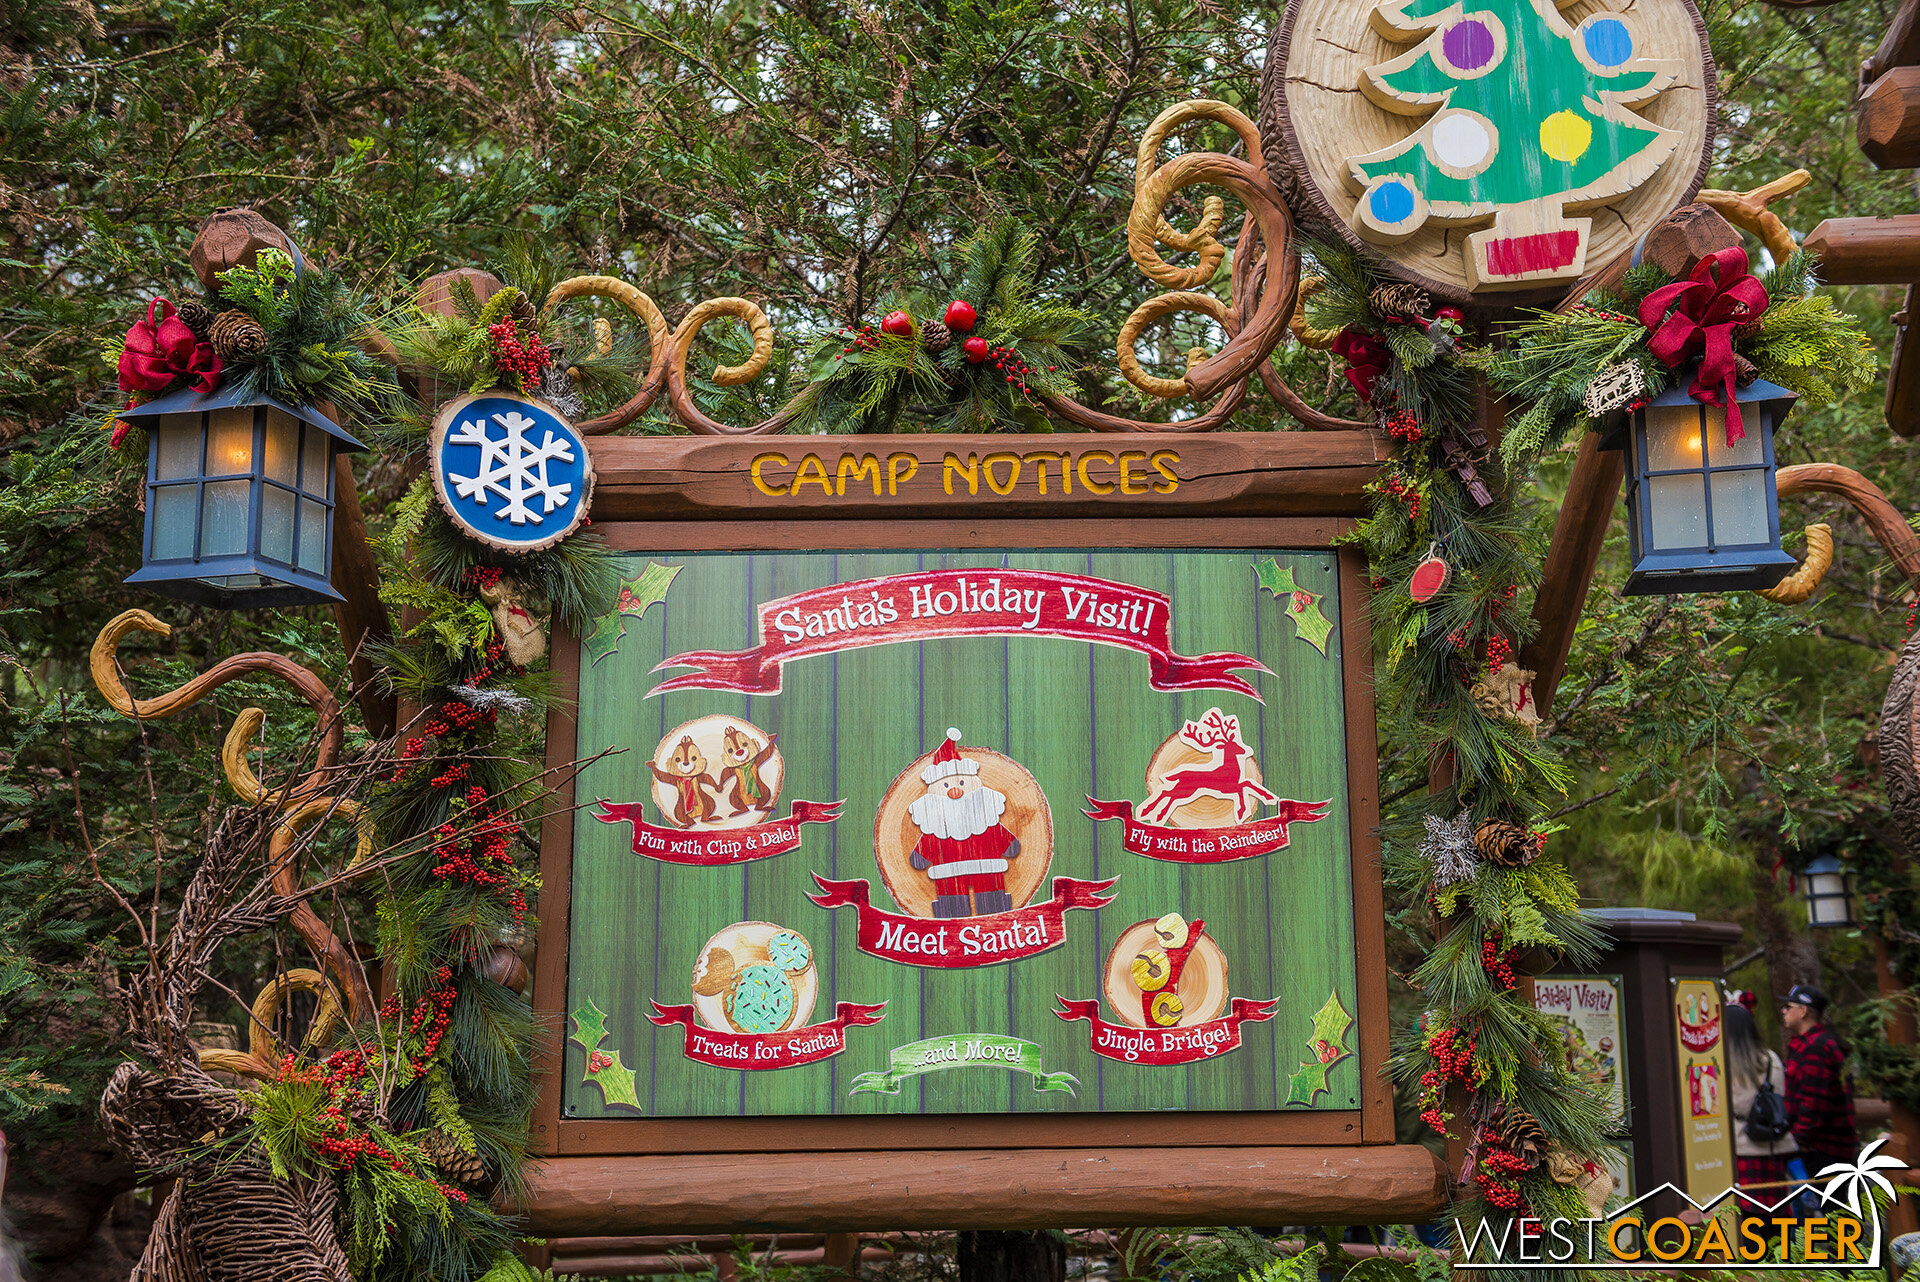  Guests can meet Santa here! 